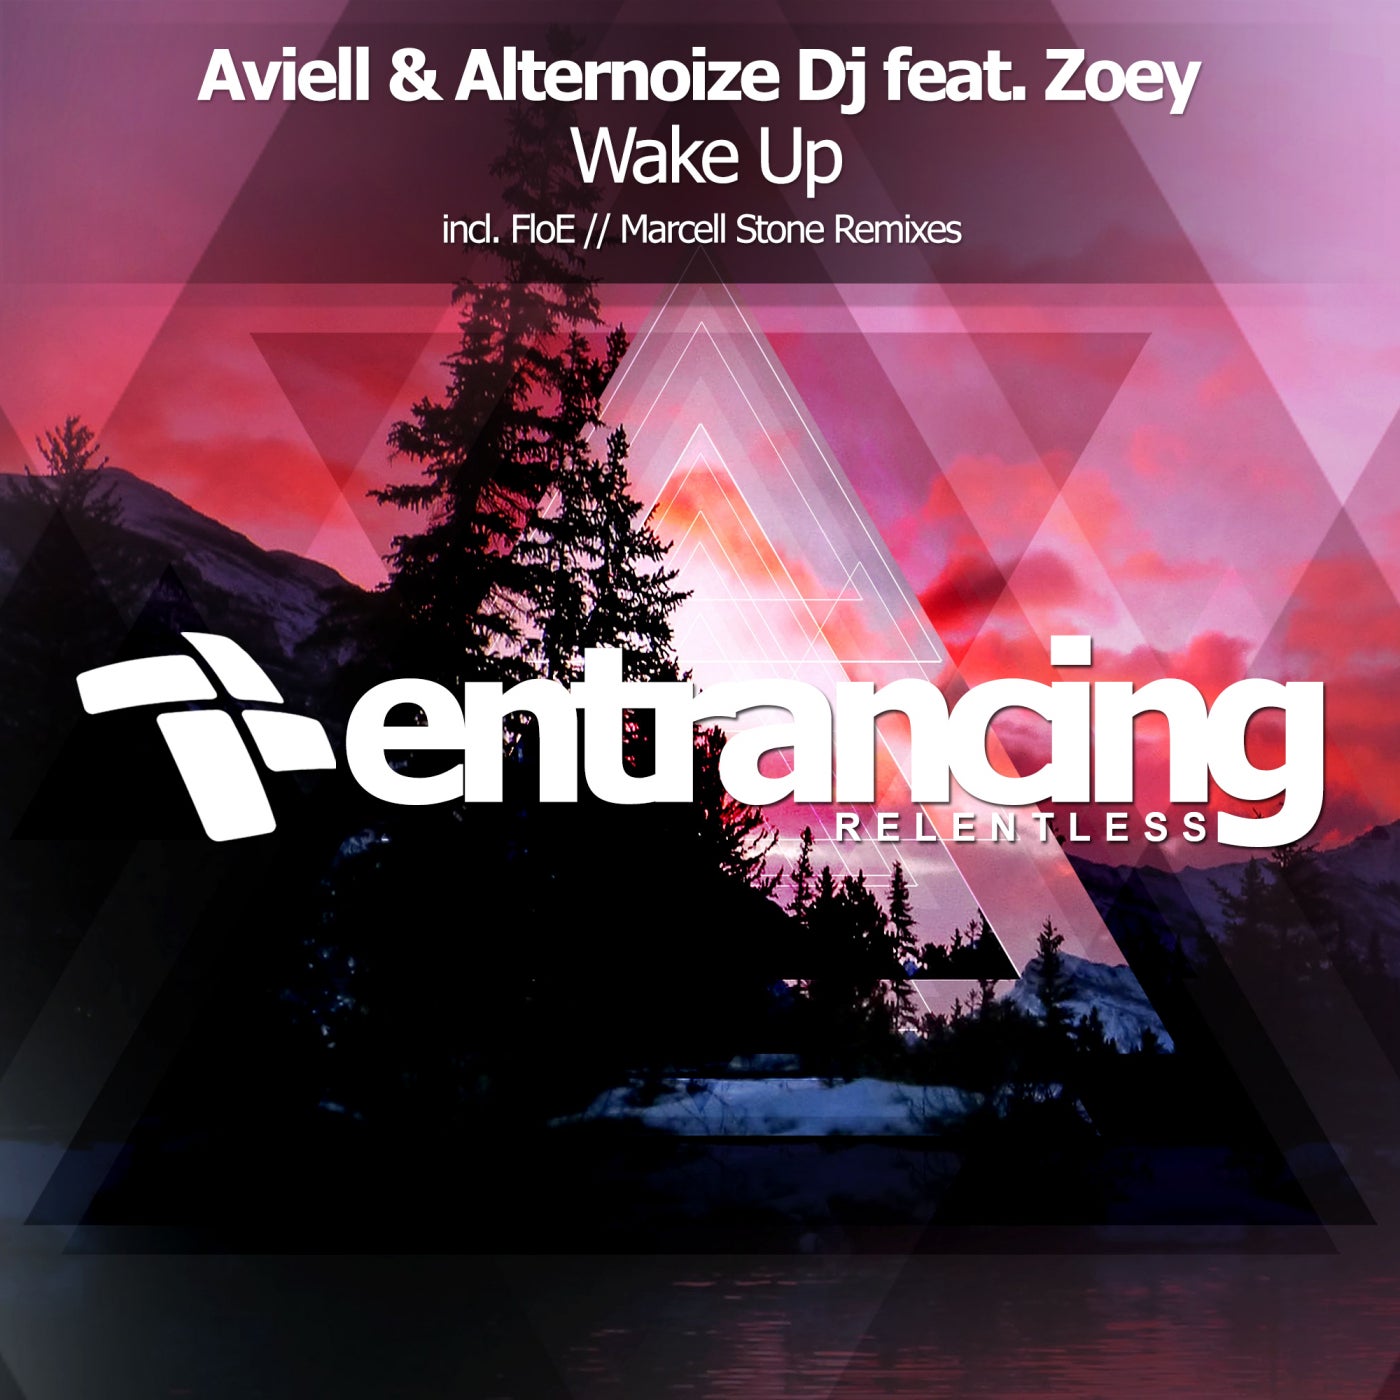 Aviell & Alternoize Dj Feat. Zoey - Wake Up (FloE Remix)